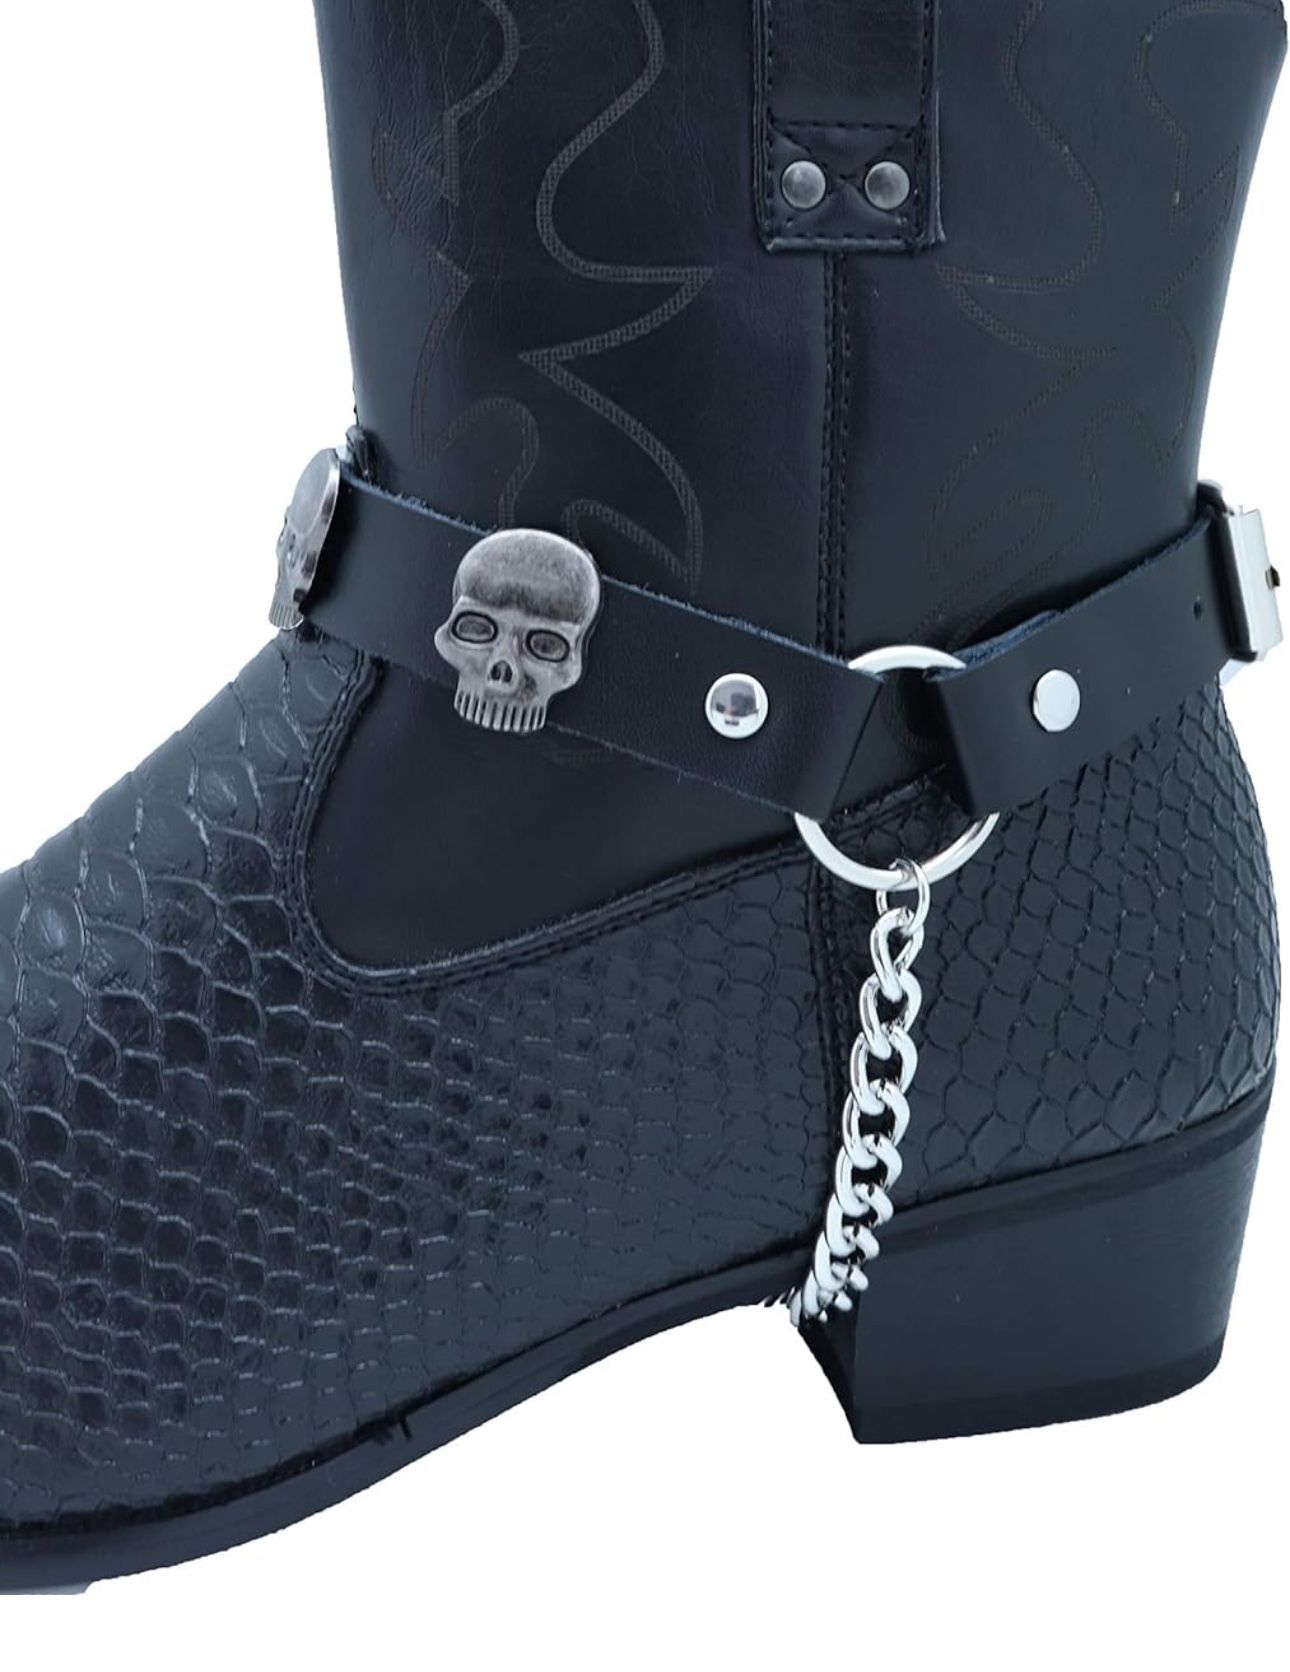 Men Biker Boot Bracelets Black Pair Straps Silver Metal Chains Shoe Shotgun Shell Charm Motorcycle Accessory Payed $35